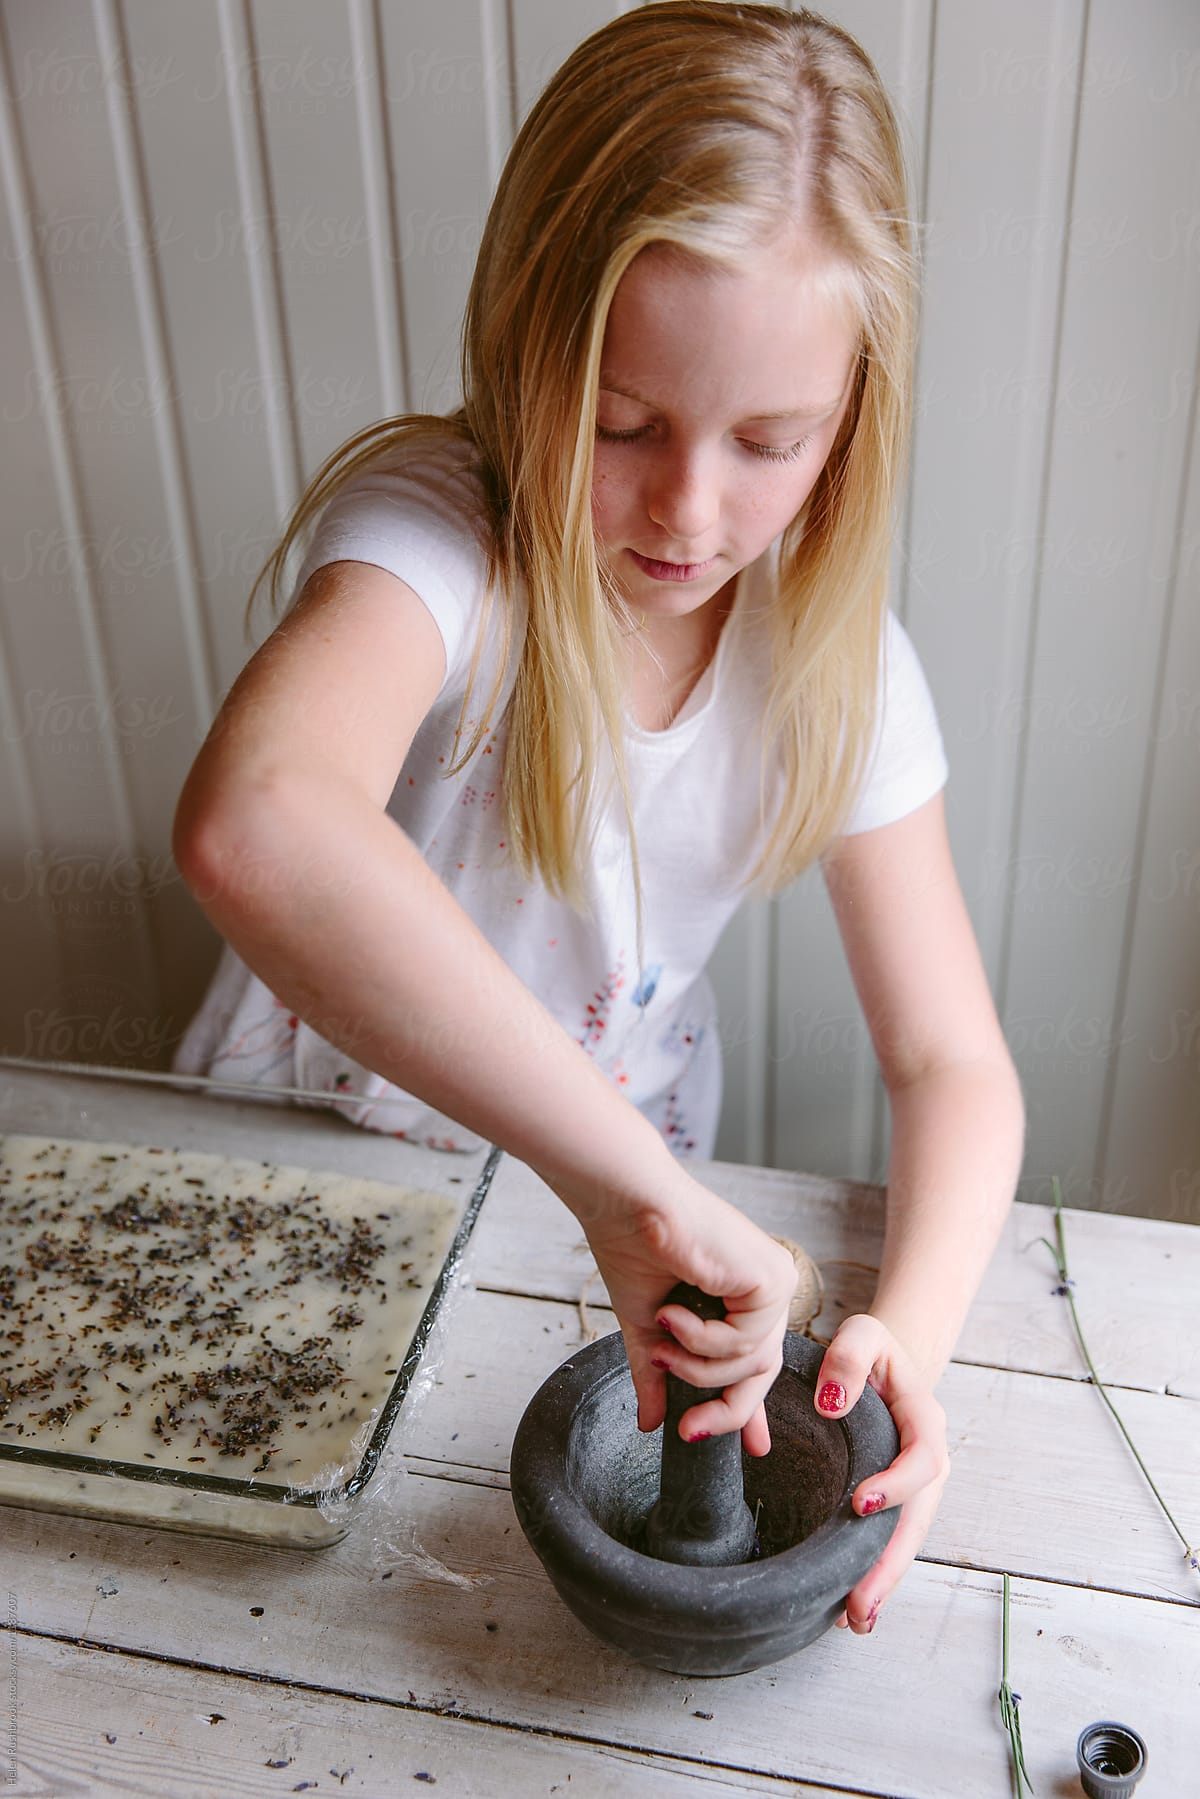 A female child making lavender soap